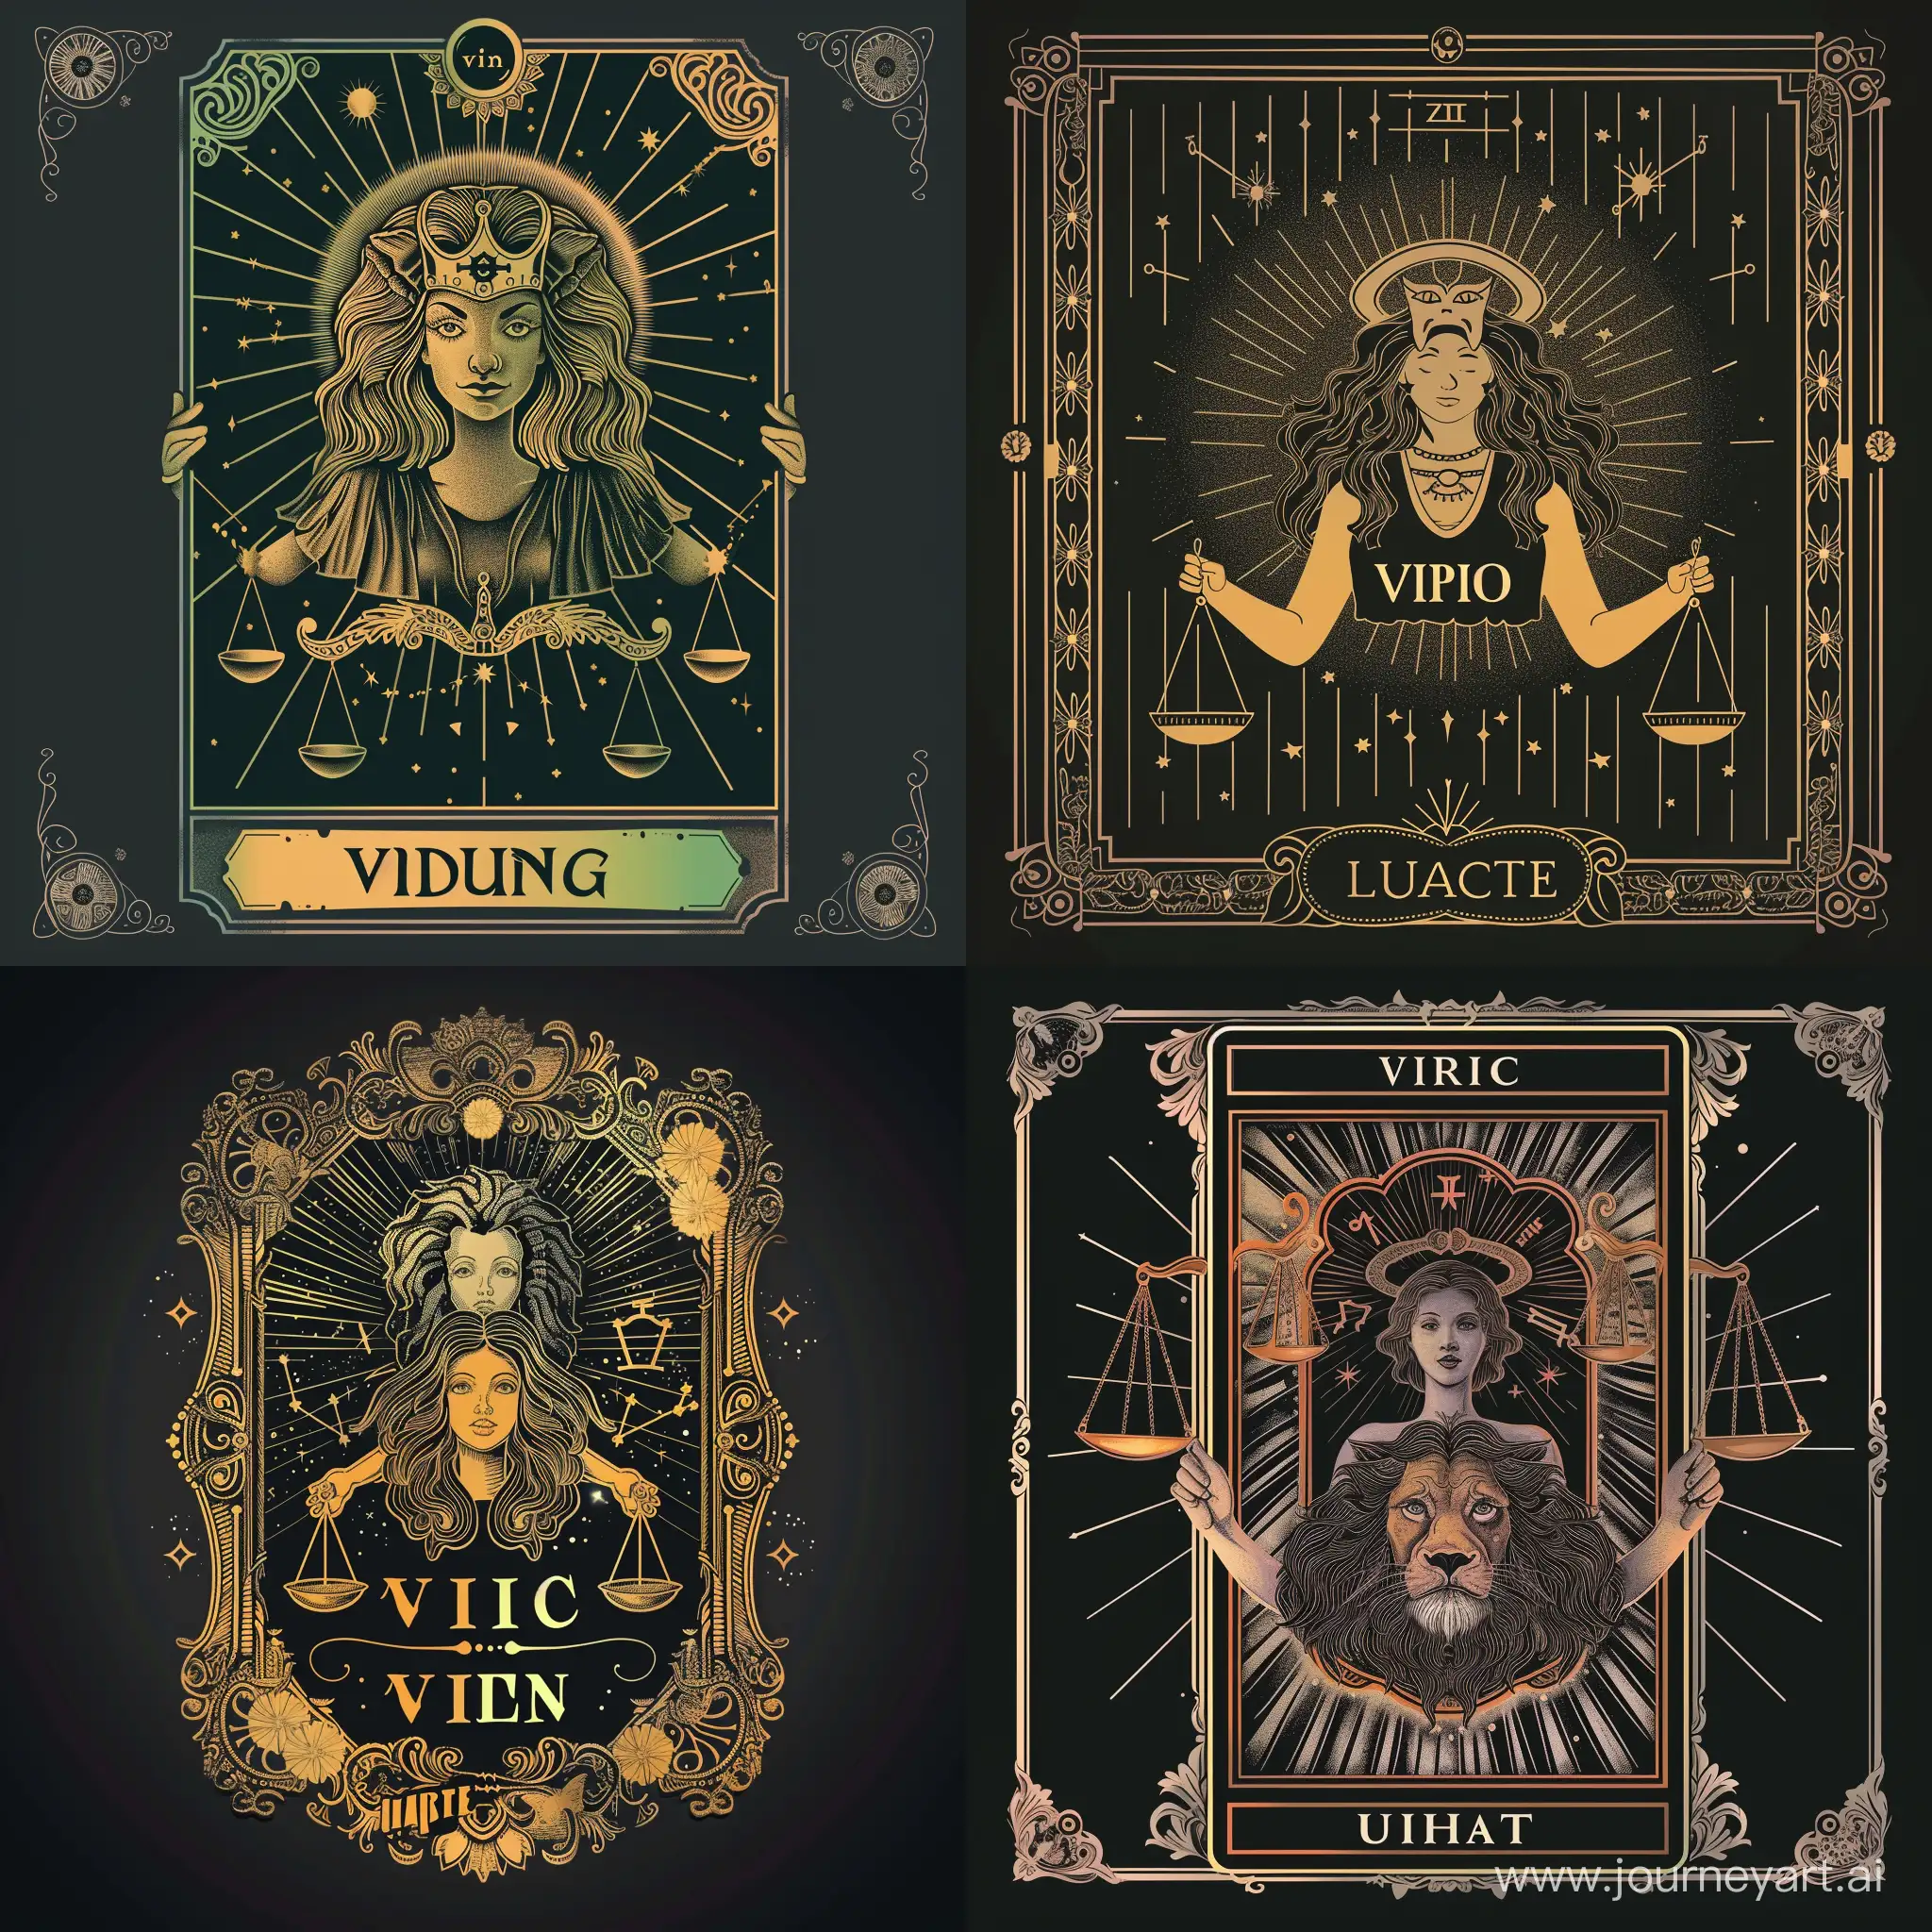 Virgo-Zodiac-Sign-Girl-Holding-Scales-Tarot-Card-Justice